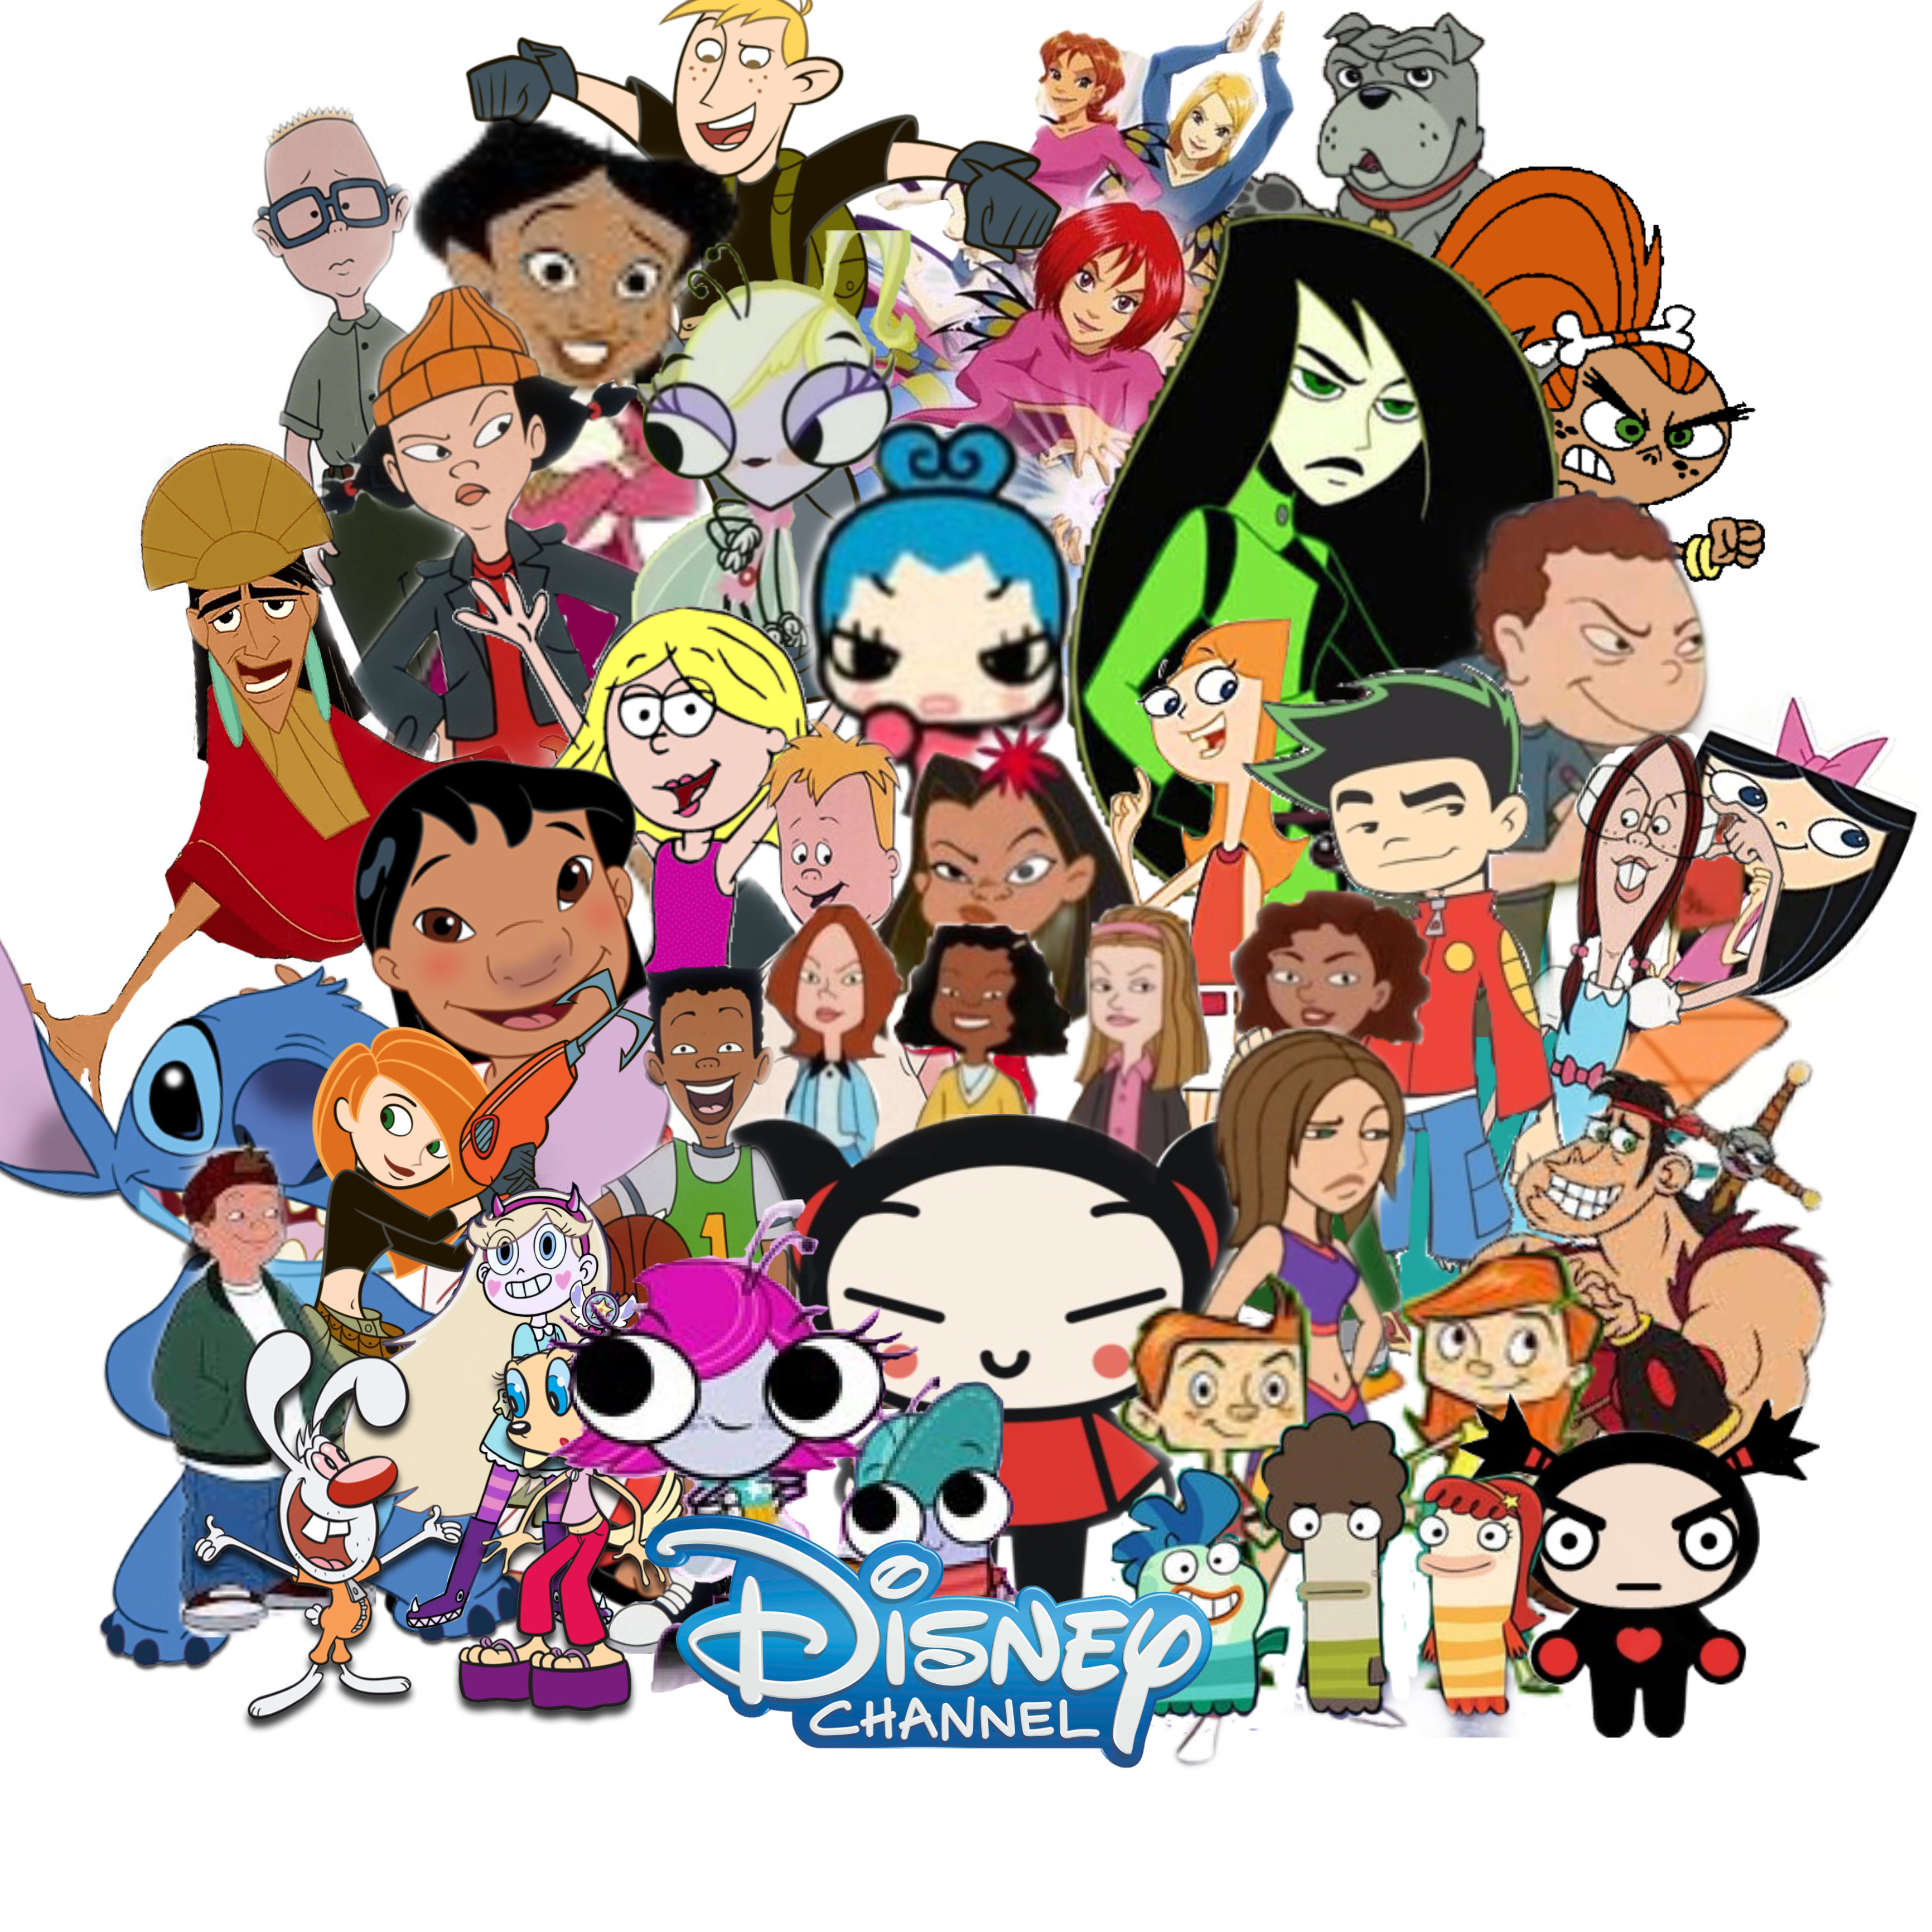 Disney Channel Cartoon Collage by pattops on DeviantArt